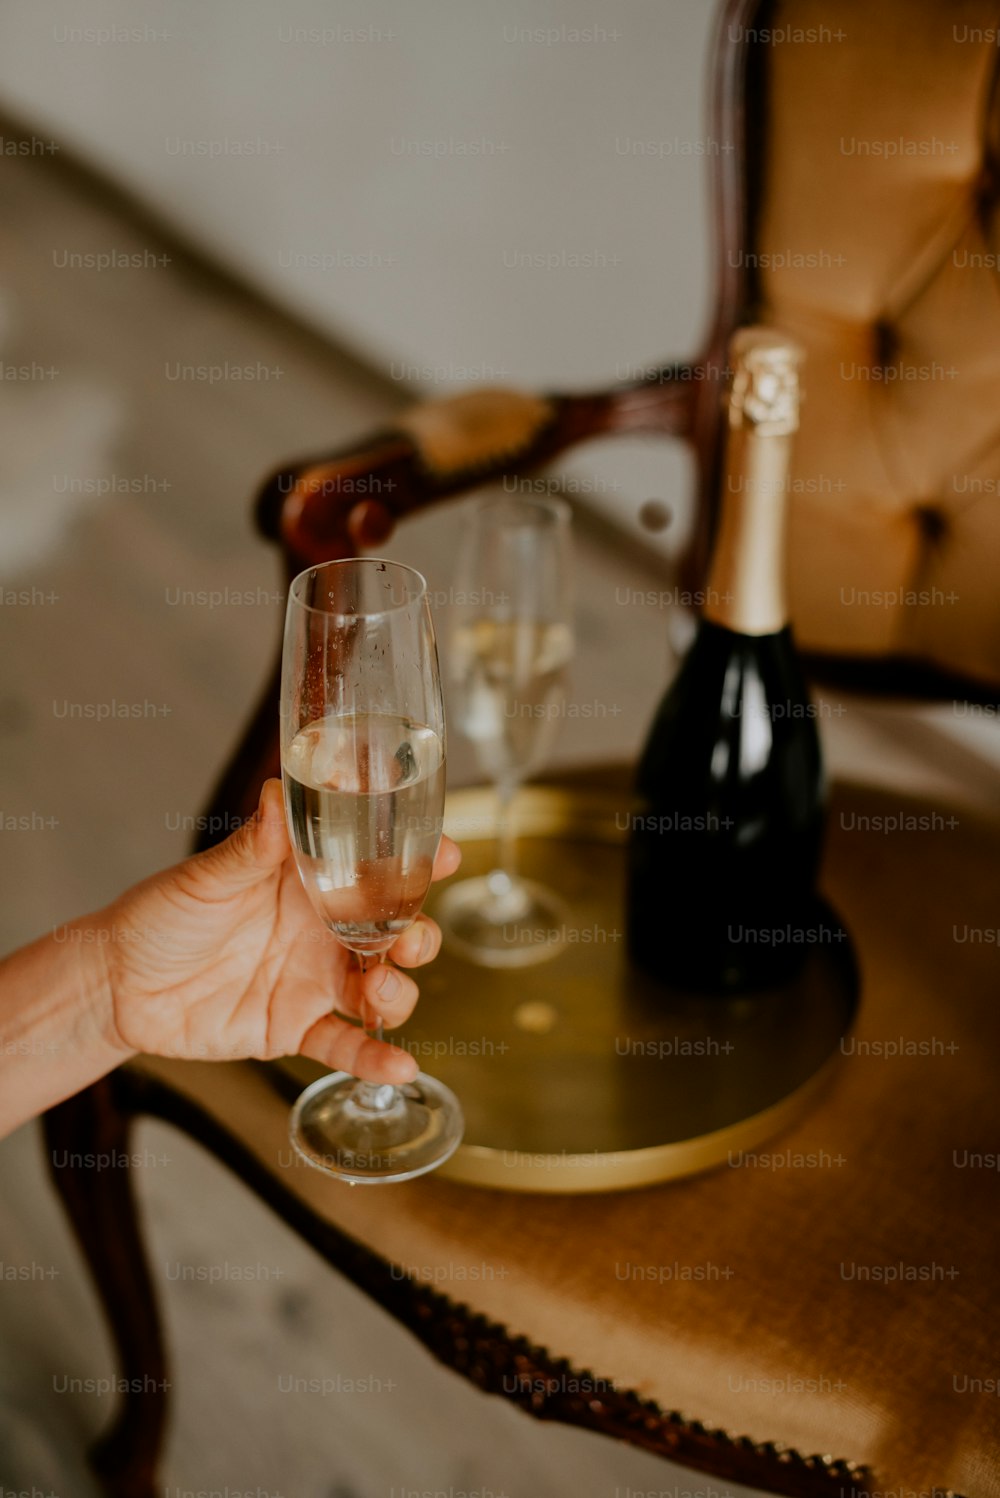 una persona sosteniendo una copa de vino frente a una botella de vino